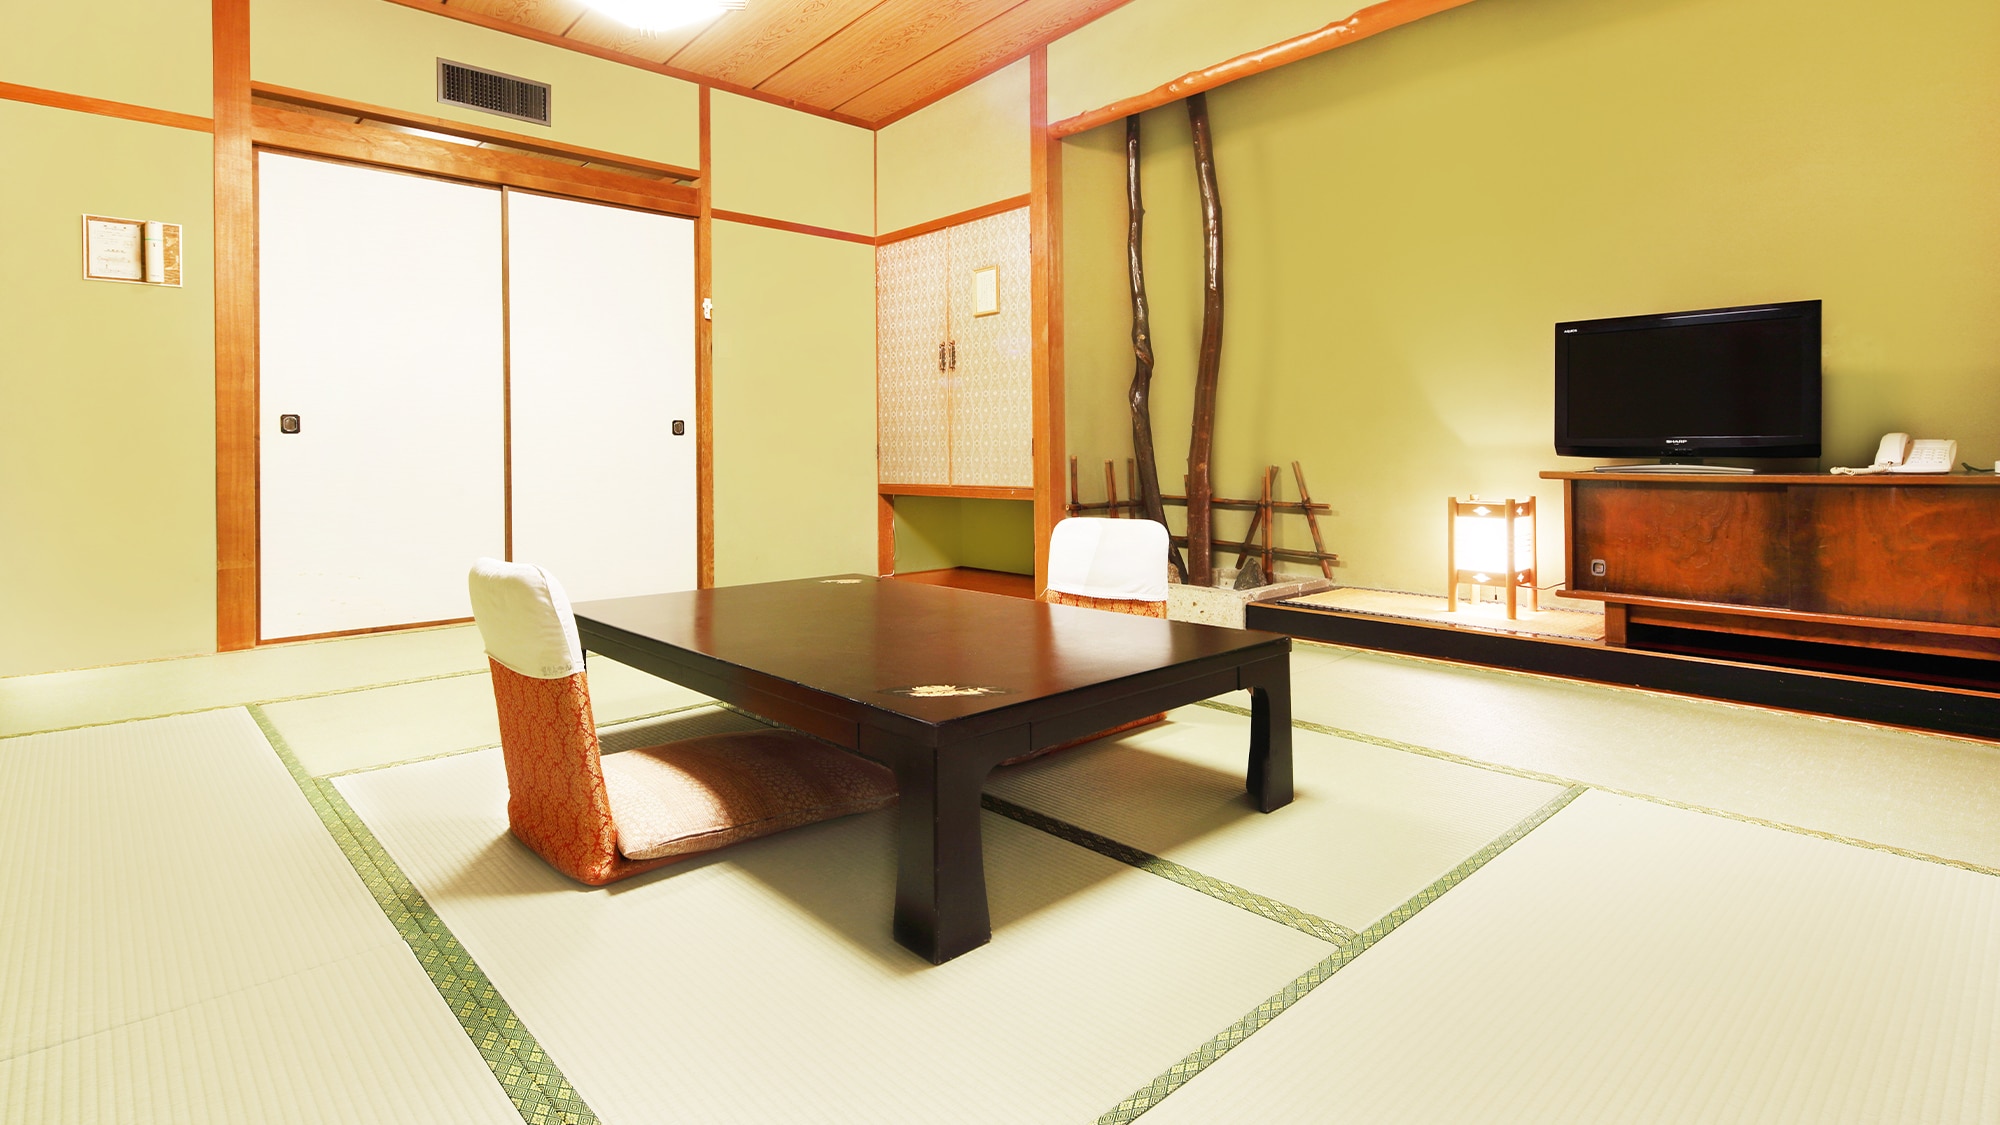 Economy B / C Japanese-style room 10 tatami mats 37㎡